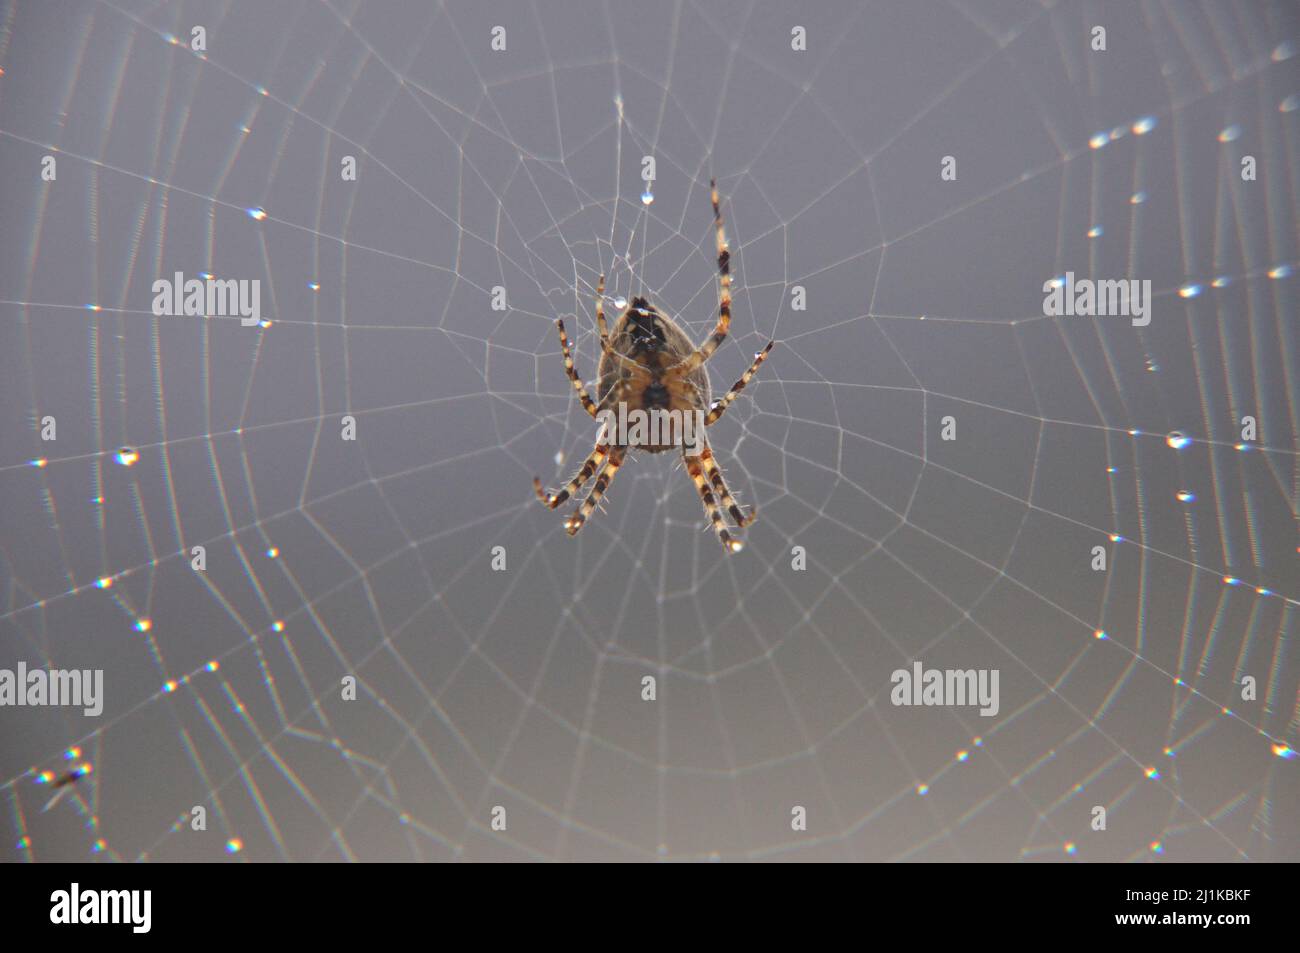 Gartenkreuzspinne (Araneus diadematus) wartet in ihrem Netz mit Wassertropfen auf Beute. - L'araignée de jardin (Araneus diadematus) attend la proie dans son nous Banque D'Images